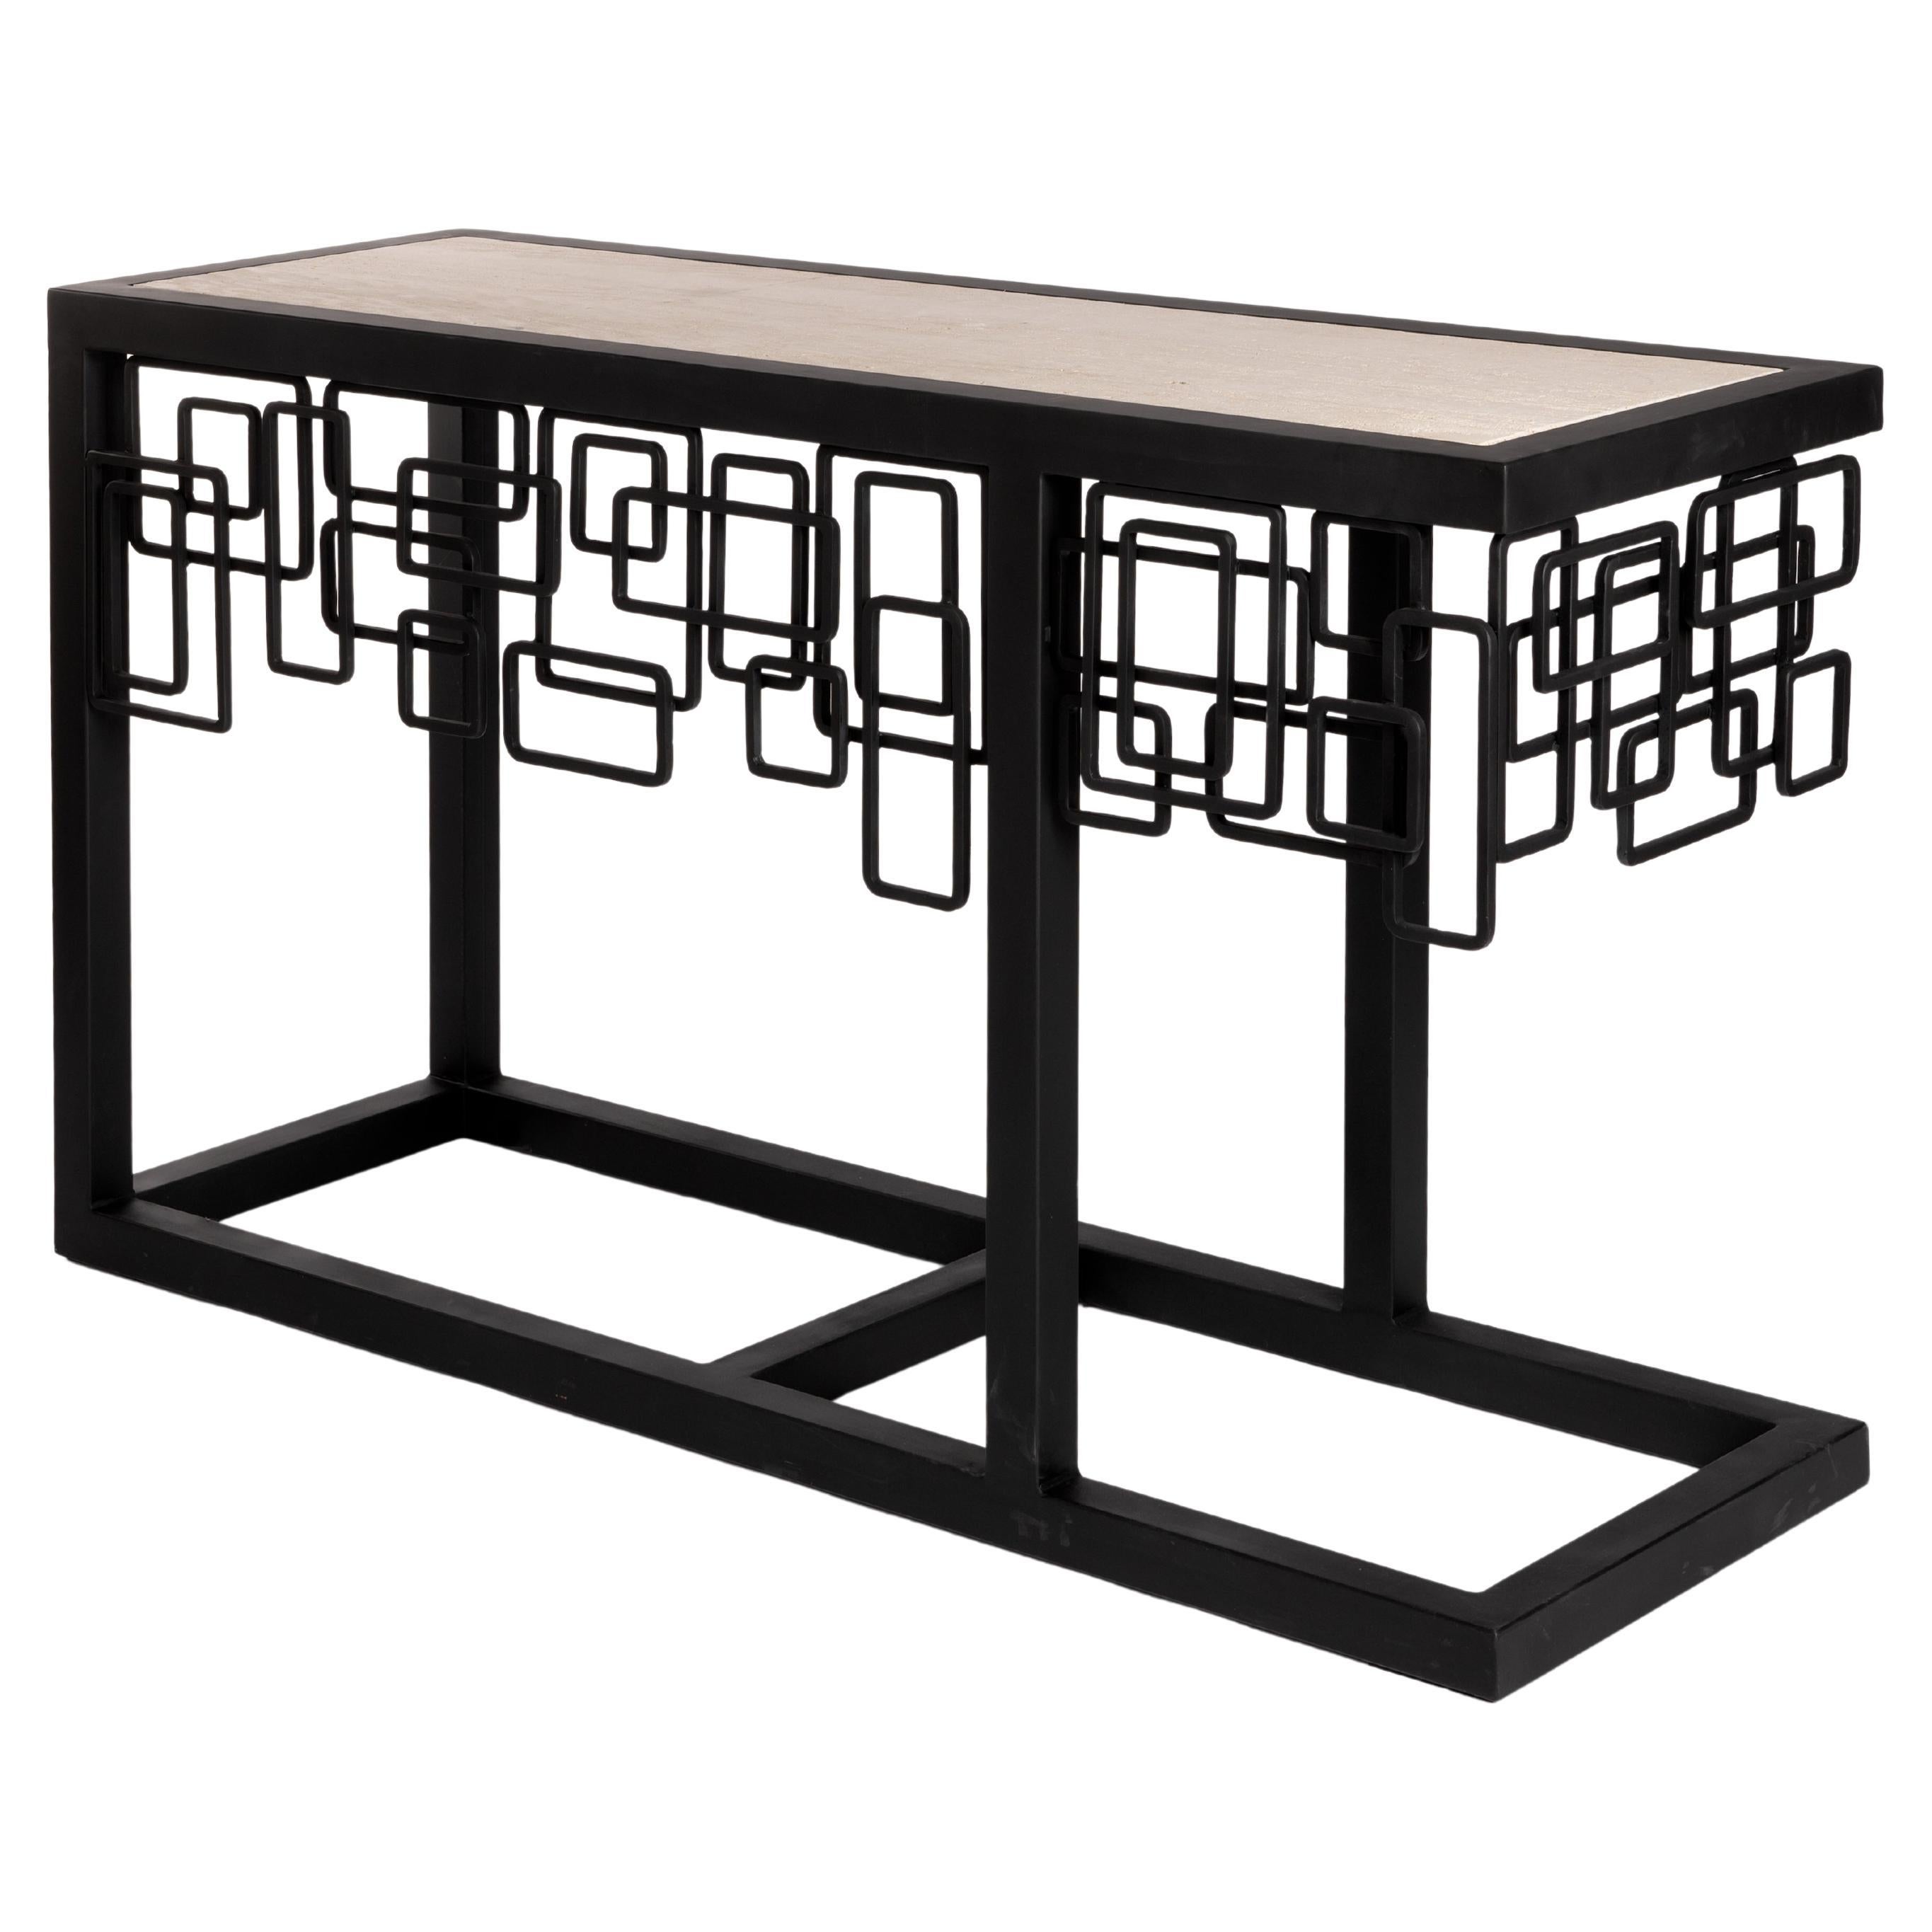 Italian Mid-Century Iron/Travertine Console Table Abstract-Geometric Design 70s